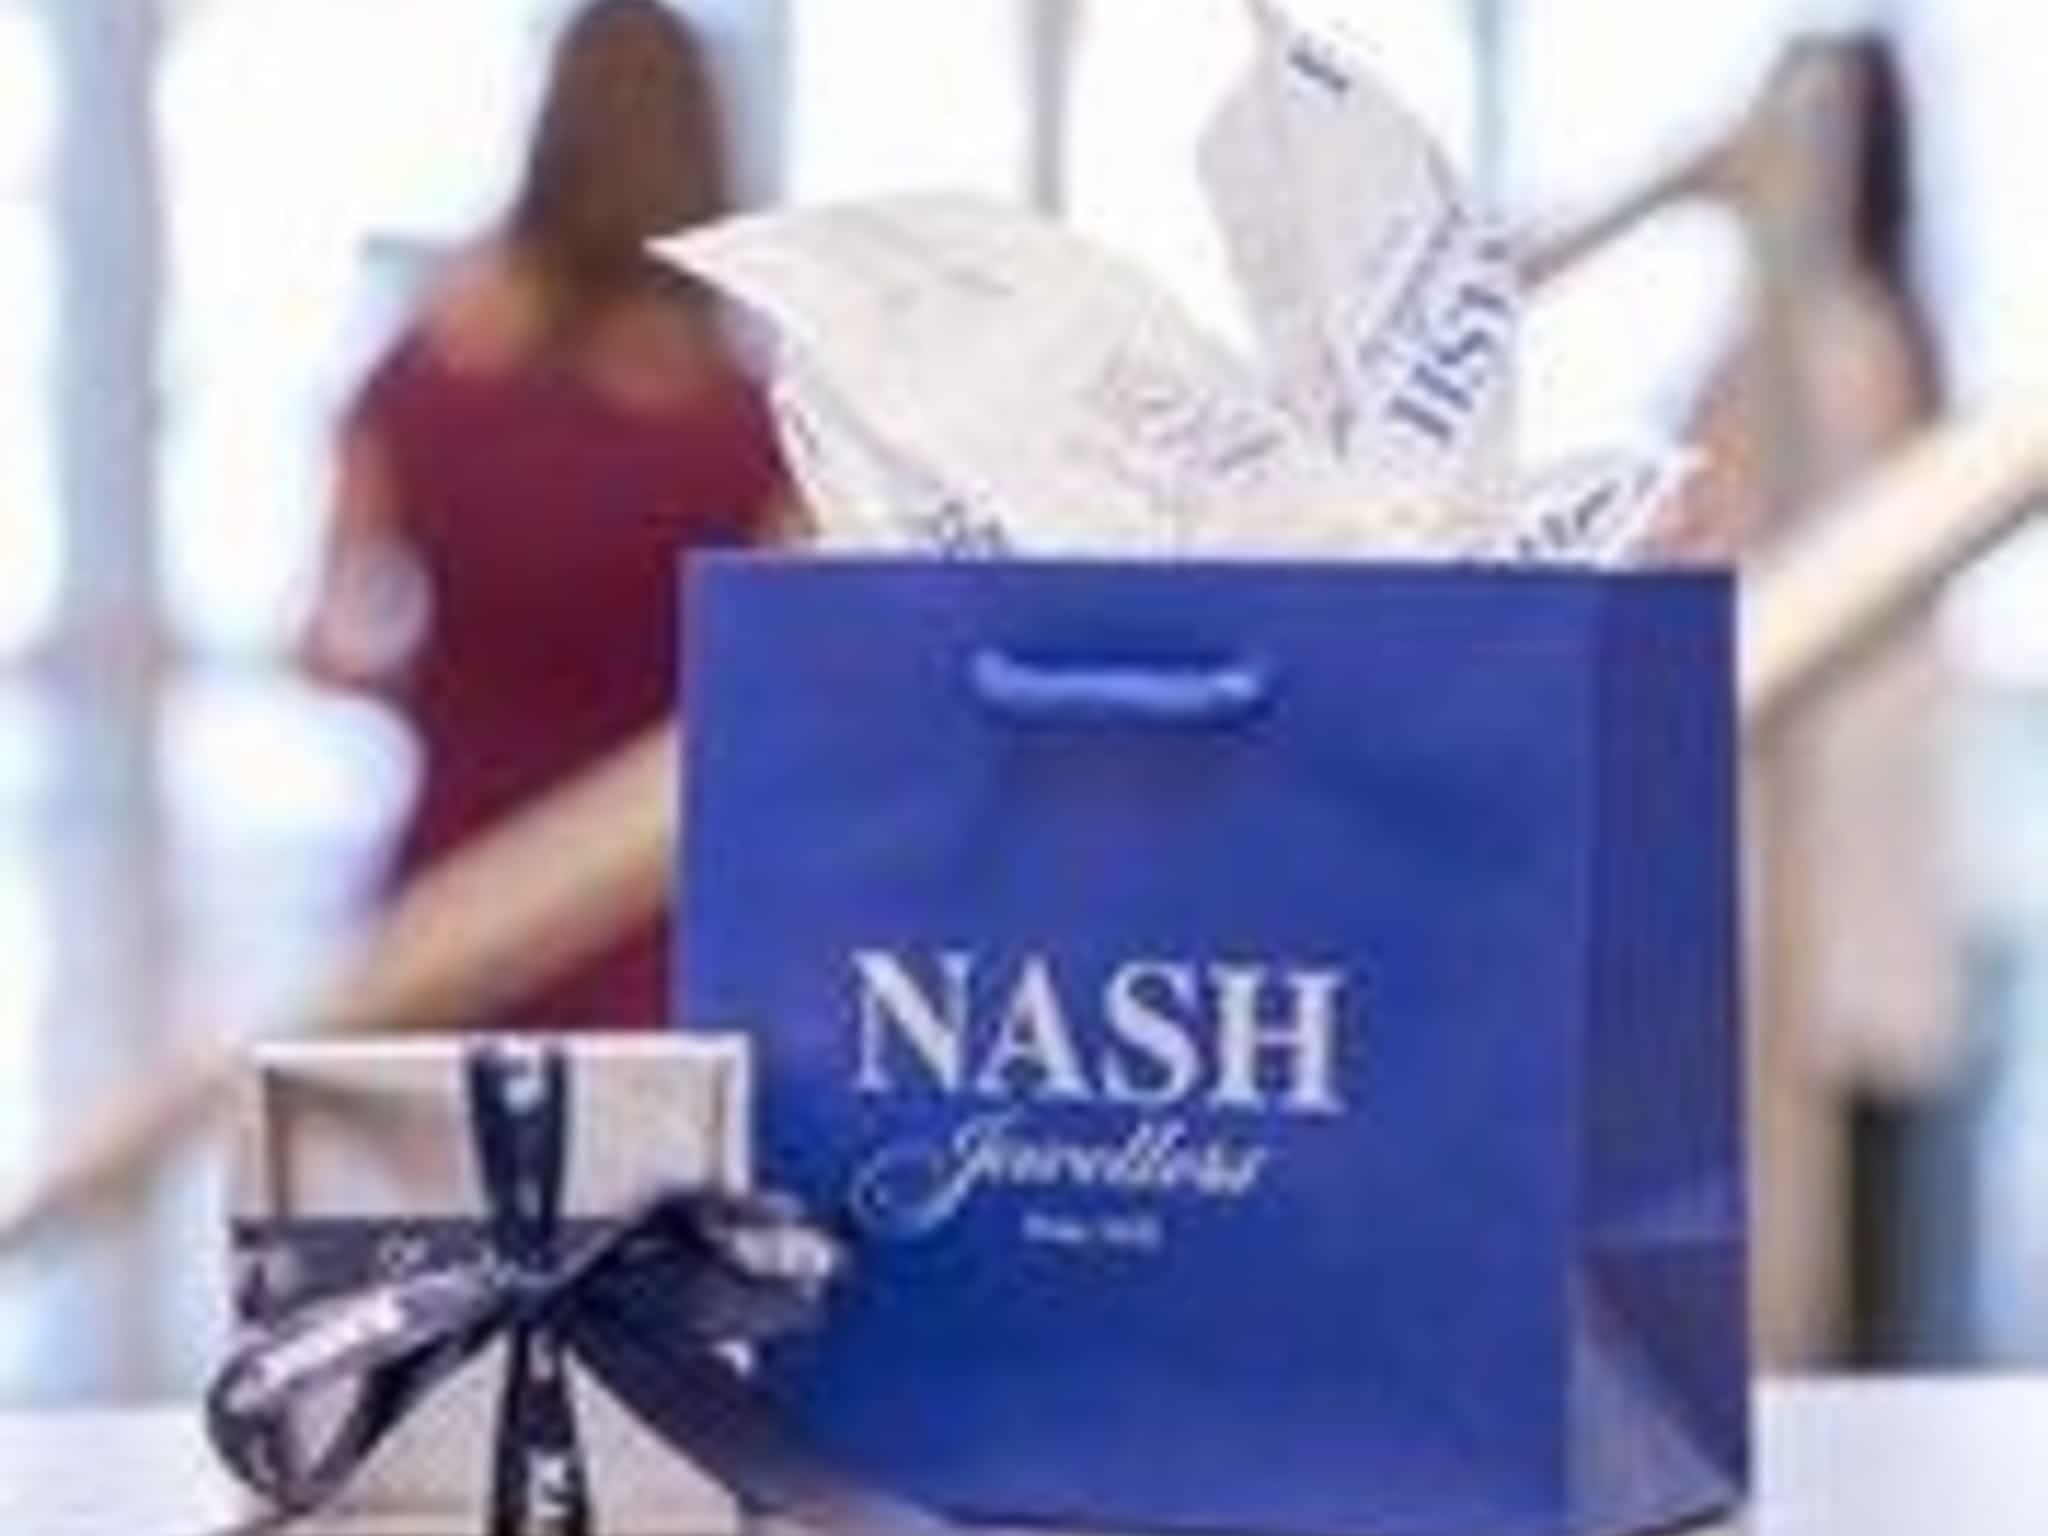 photo ?Nash Jewellers? - Official Rolex Retailer